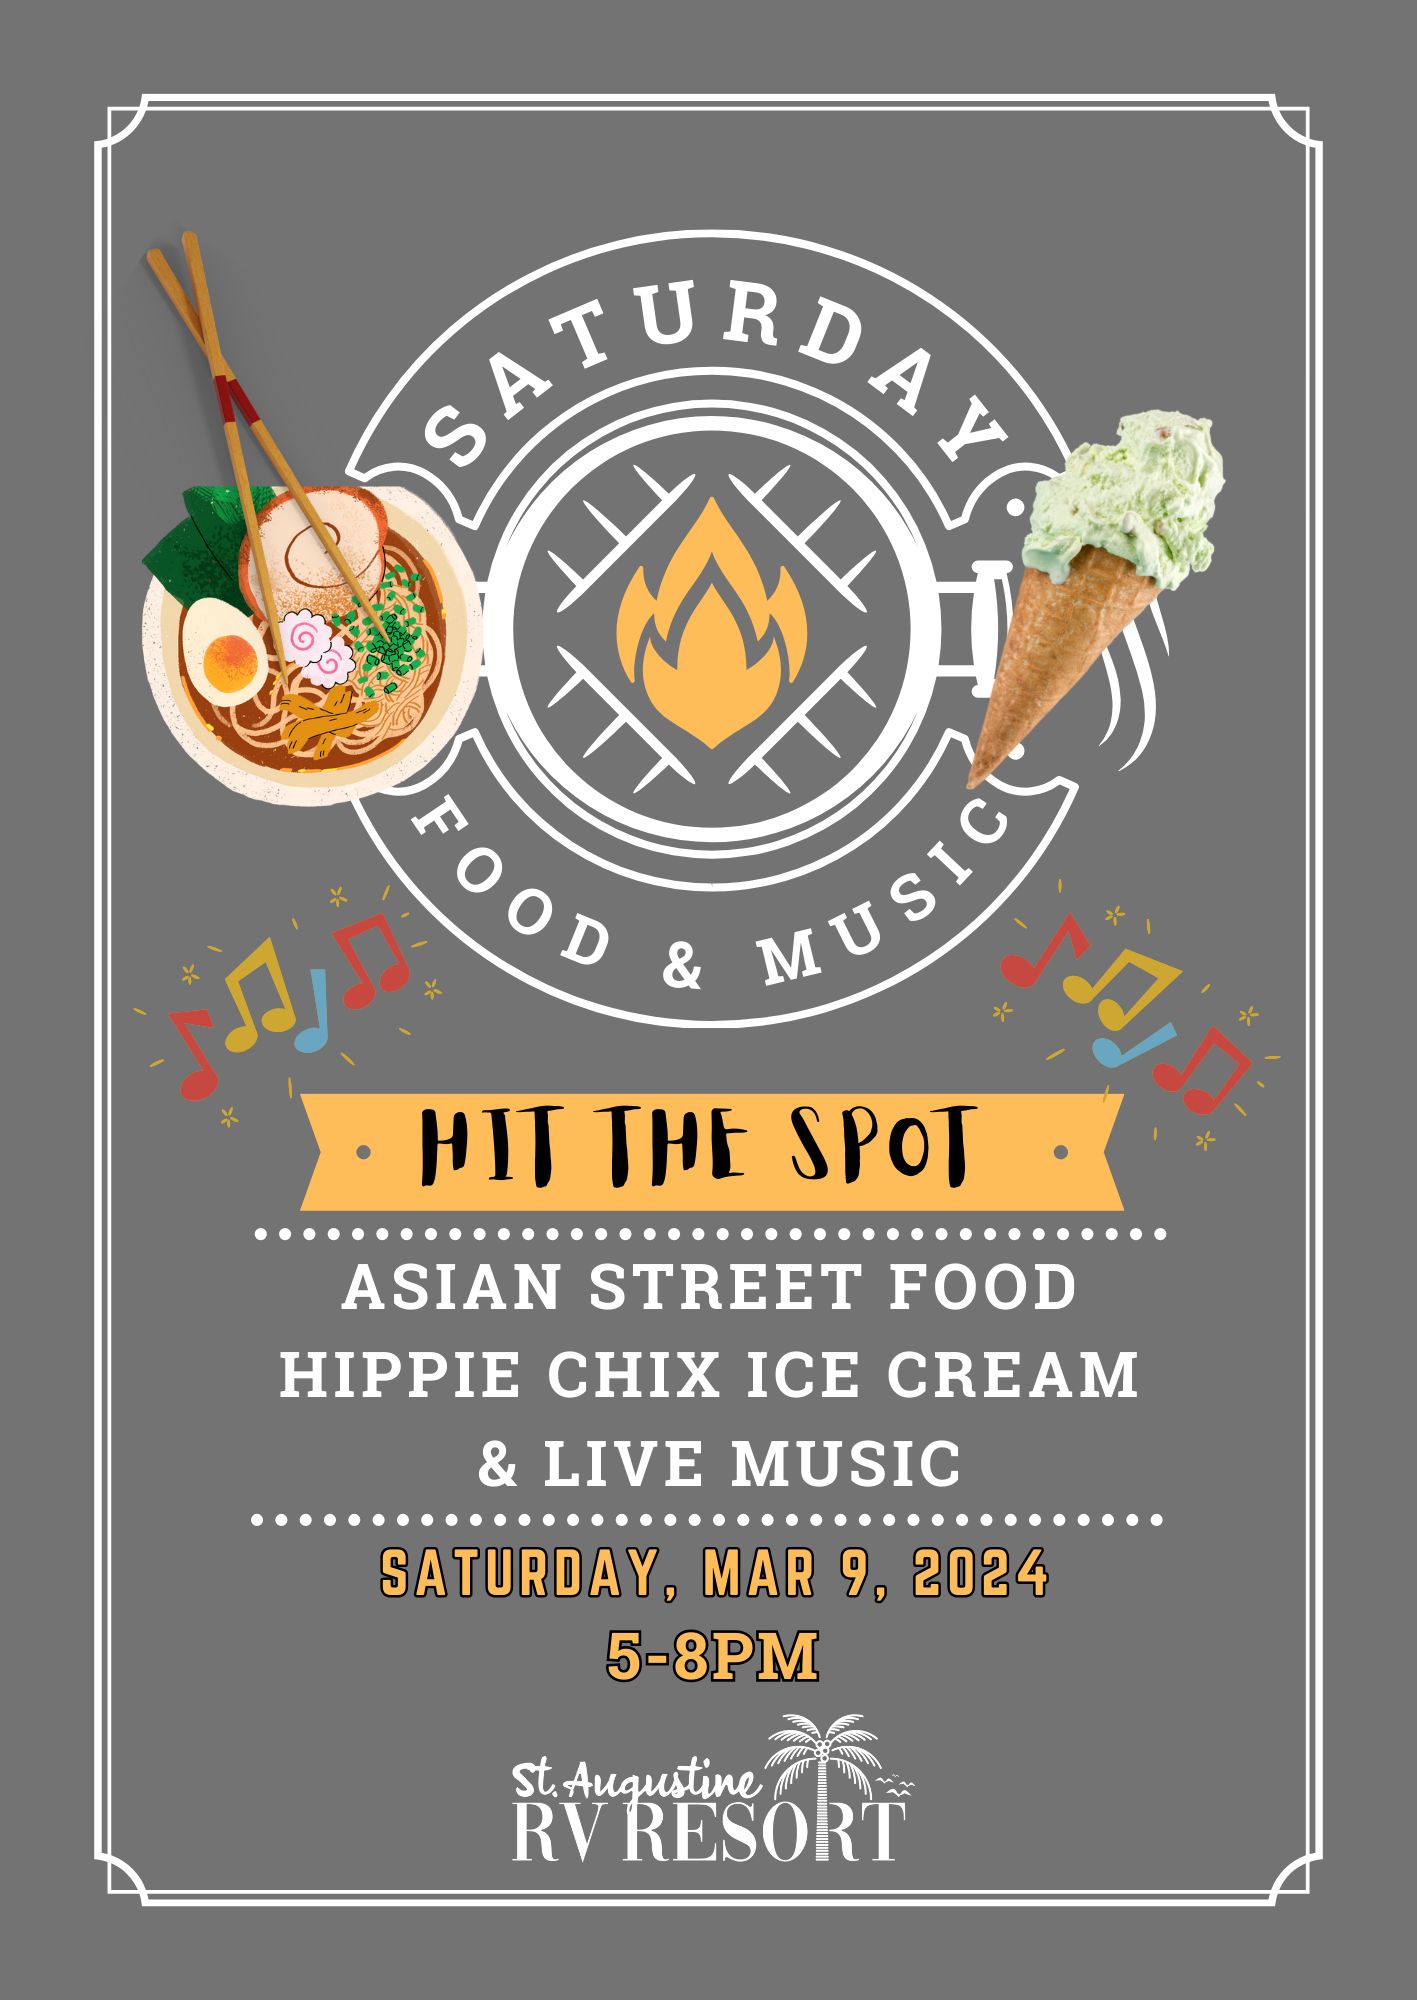 Asian Street Food, Ice Cream & Live Music Saturday March 9, 2024